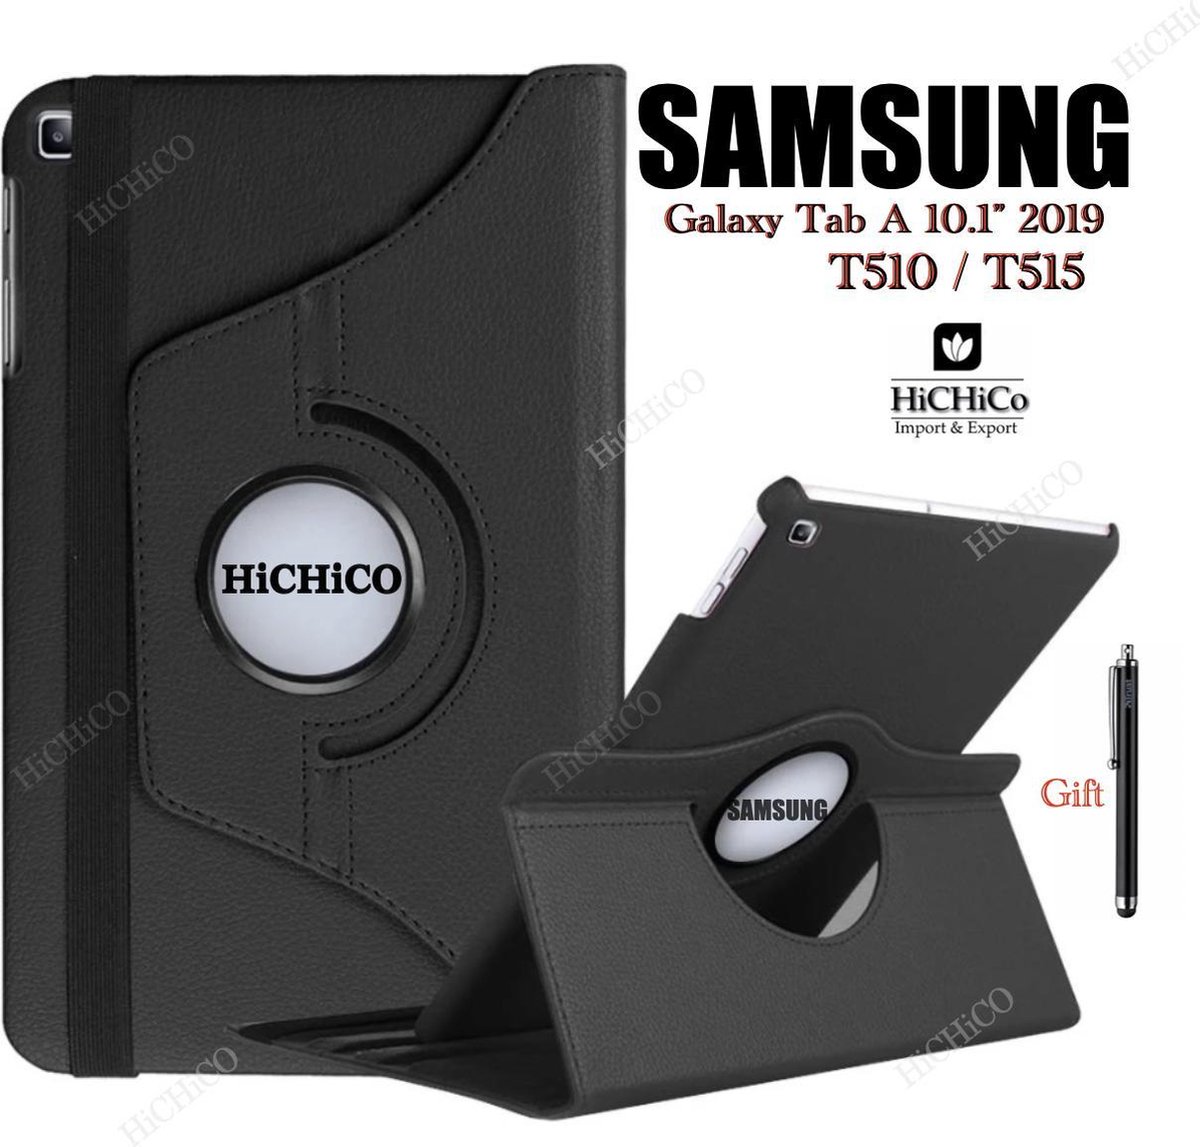 HiCHiCO Tablet Hoes voor Samsung Galaxy Tab A 10.1” 2019, Galaxy Tab T510 / T515 Hoesje, 360 Graden Draaibaar Tablet Case met Stylus Pen